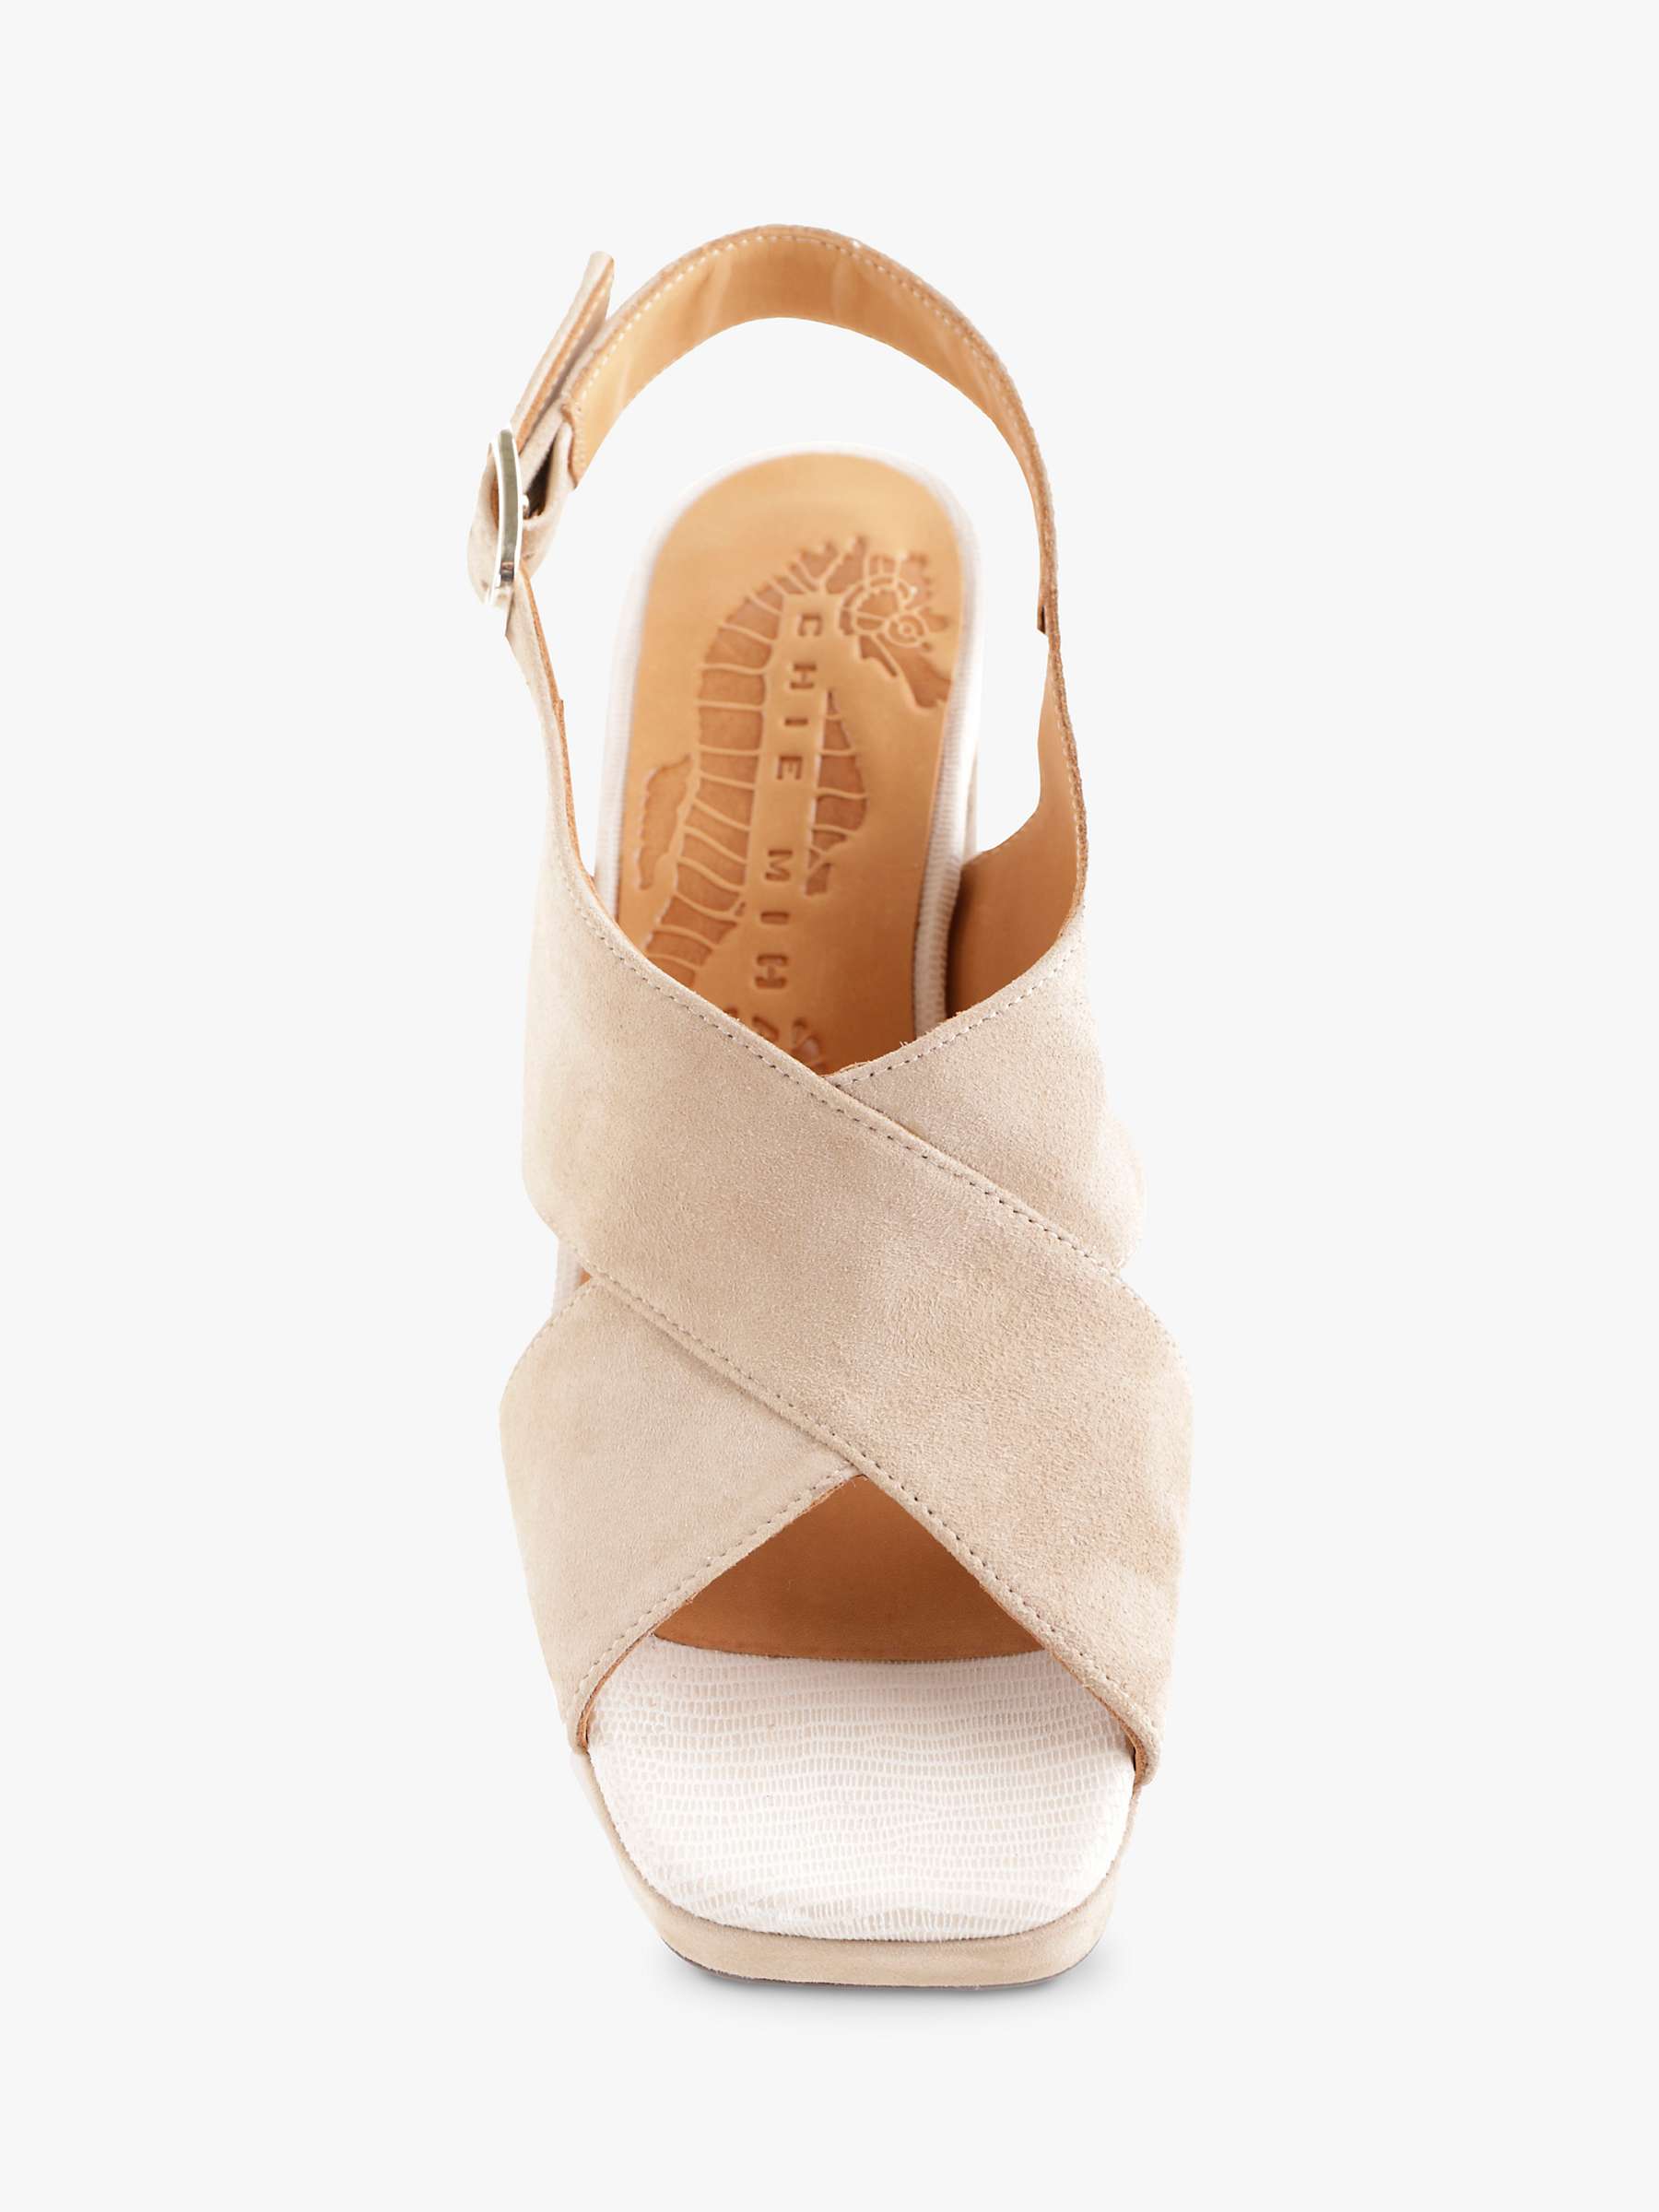 Buy Chie Mihara Gesto Leather Sandals, Antetoast/Jeeplake Online at johnlewis.com